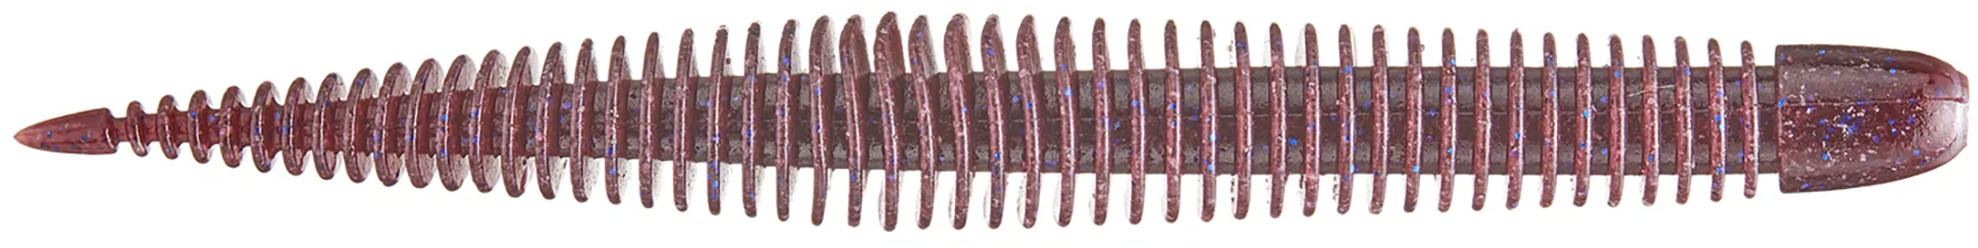 Geecrack Bellows Stick Worm - 5.8 Inch